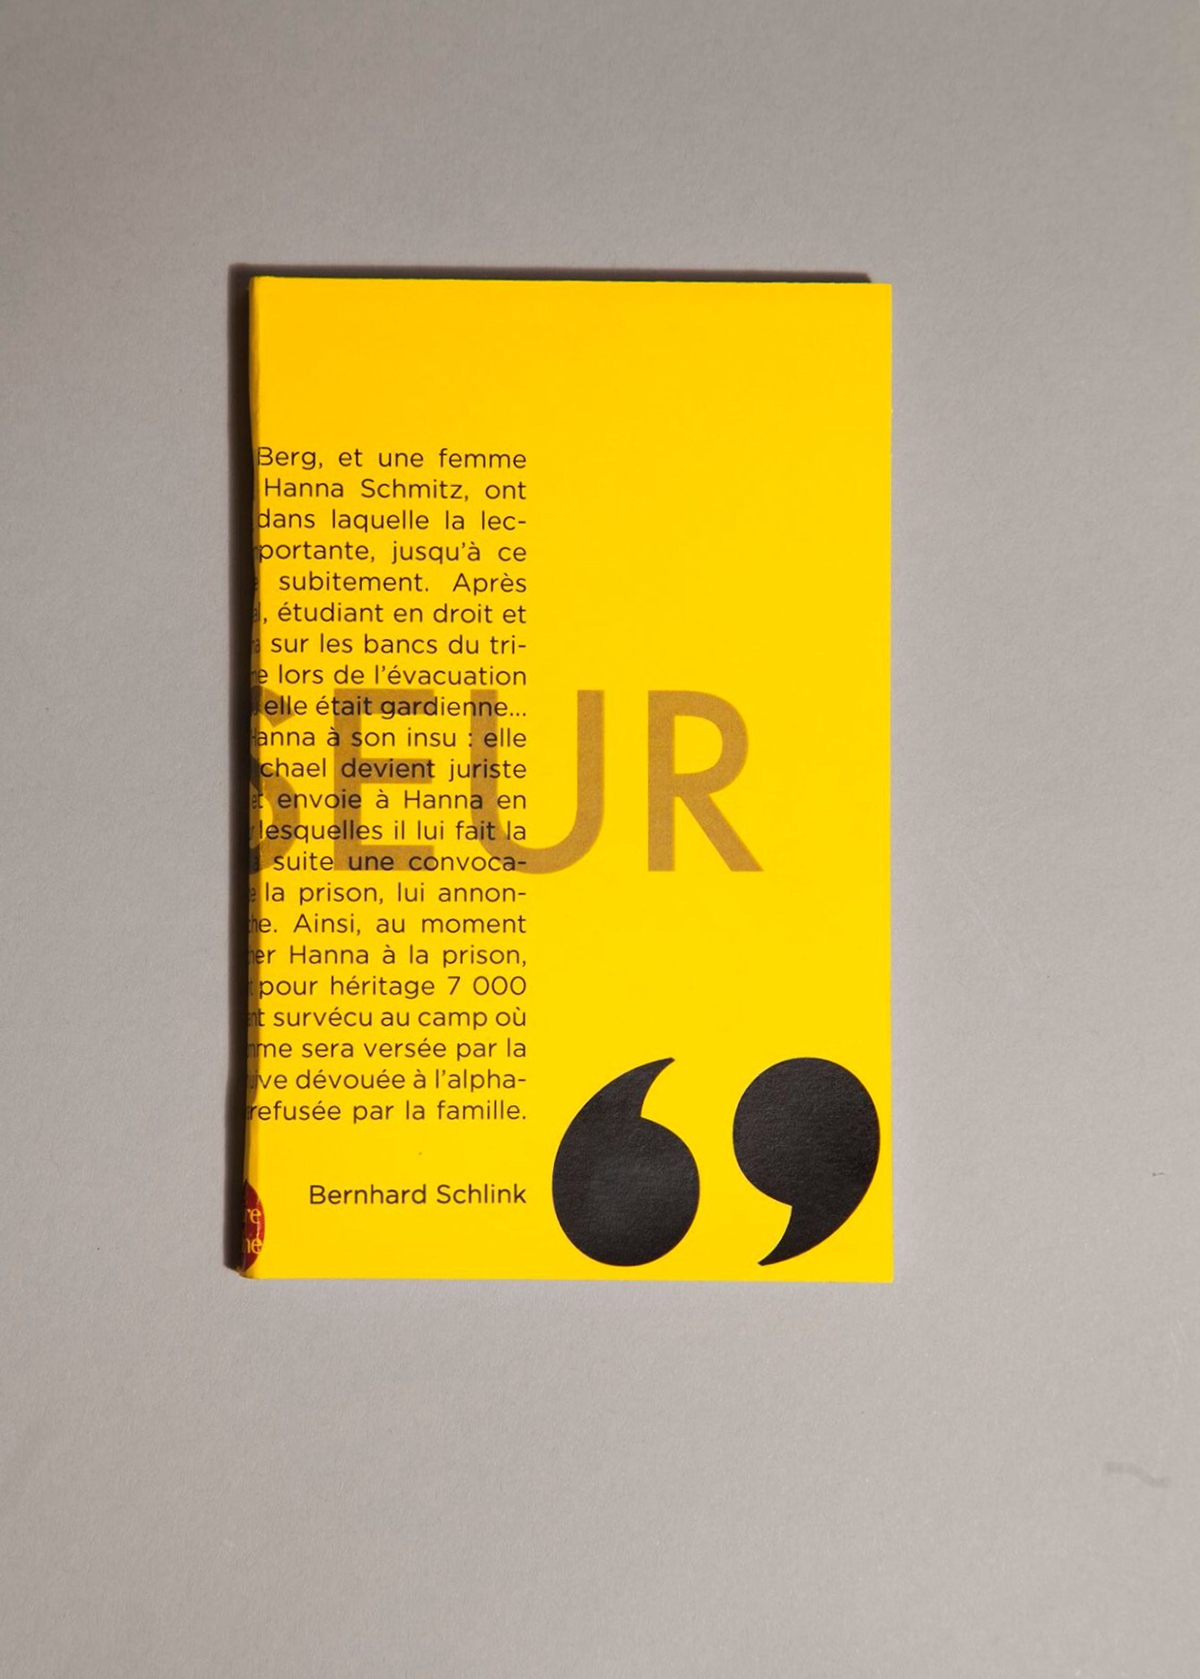 livre book edition design editorial colors mondrian